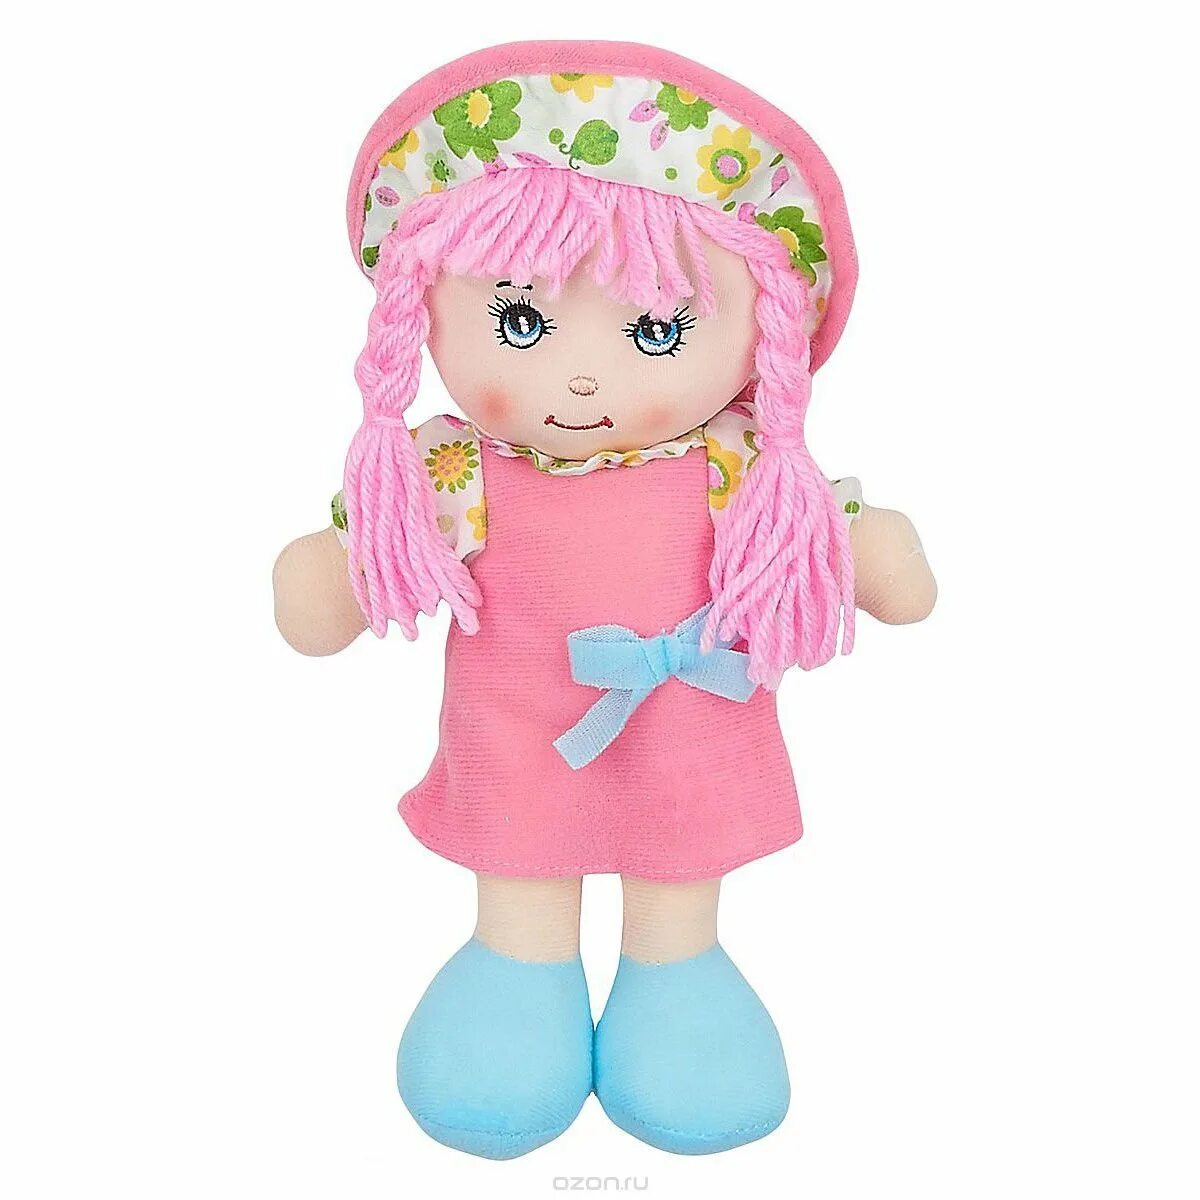 Озон пупс. Мягкая кукла. Куклы для девочек. Мягкая кукла для девочек. Кукла мягкая большая.